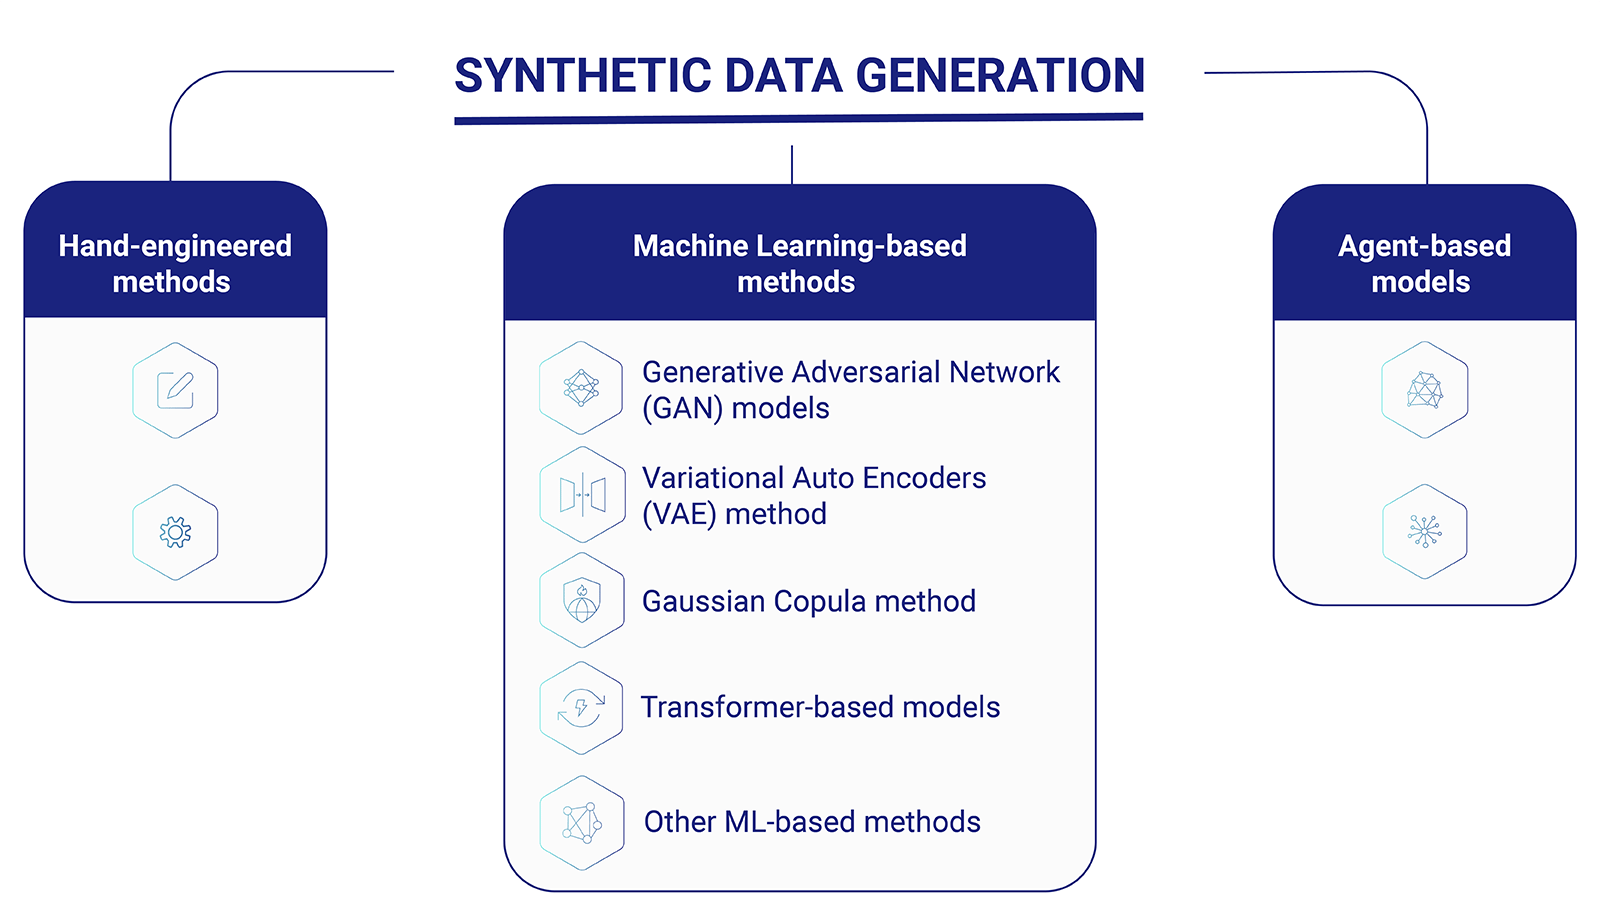 Synthetic data generation methods